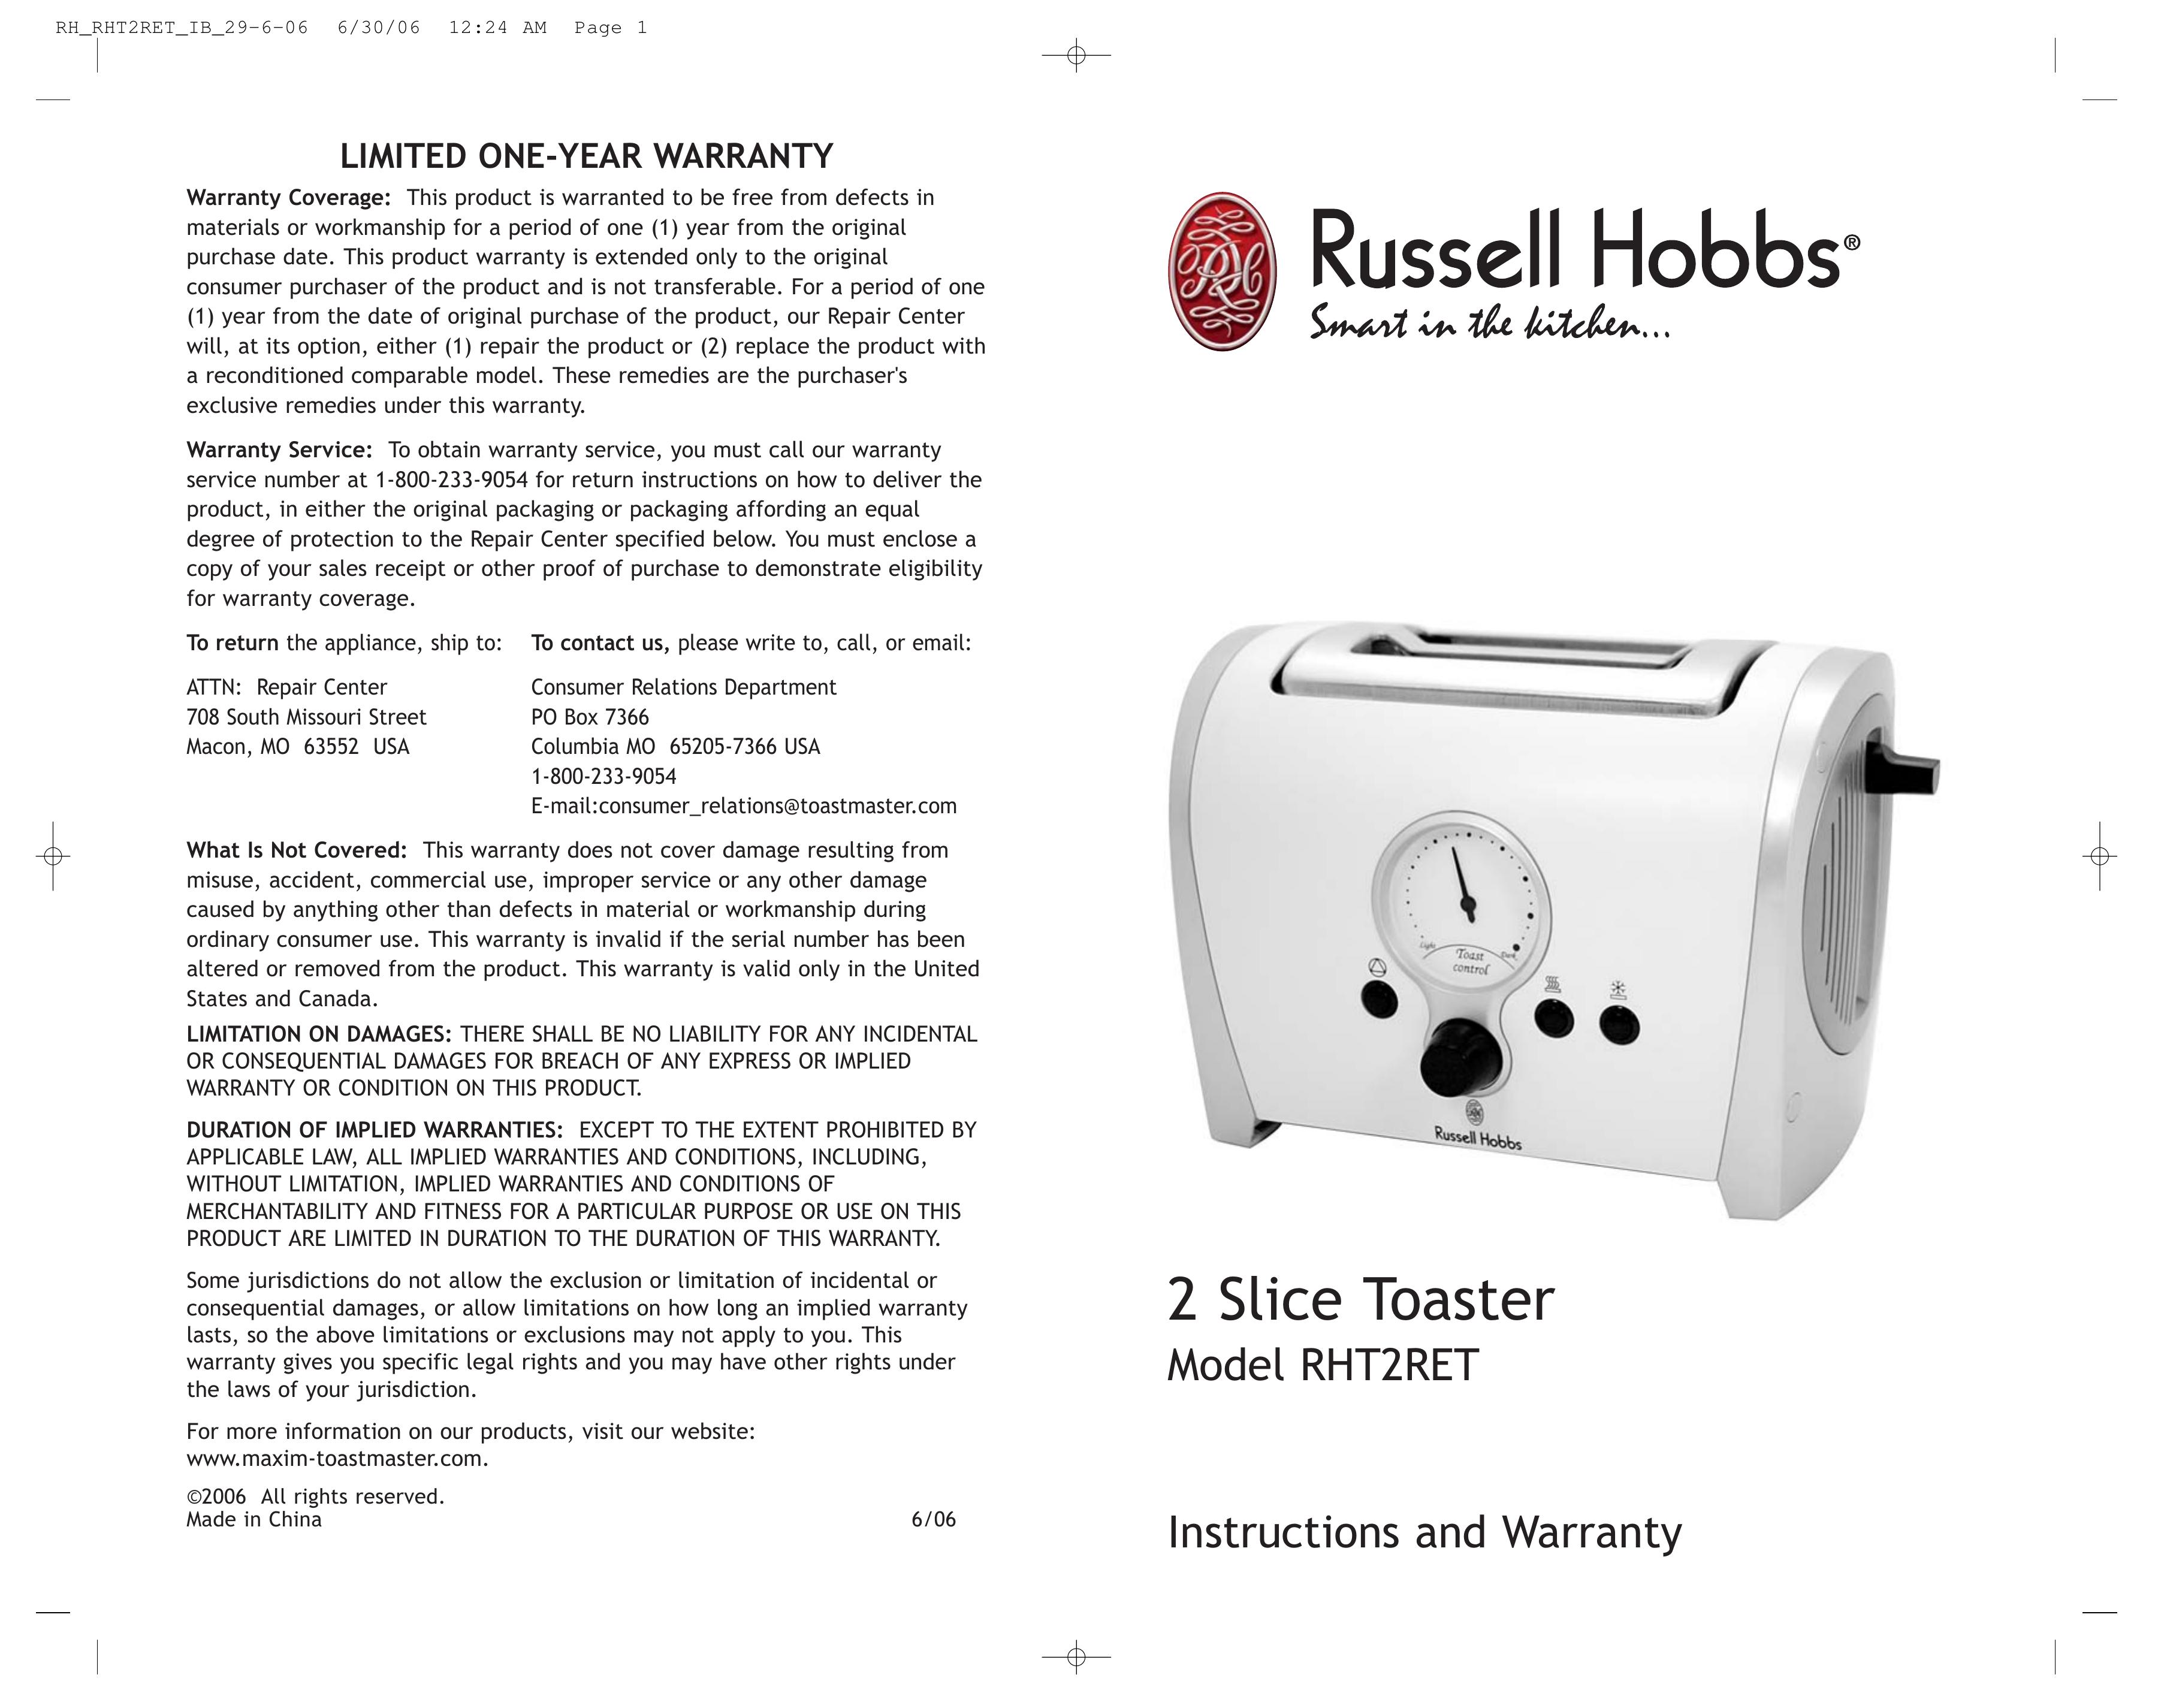 Toastmaster RHT2RET Toaster User Manual